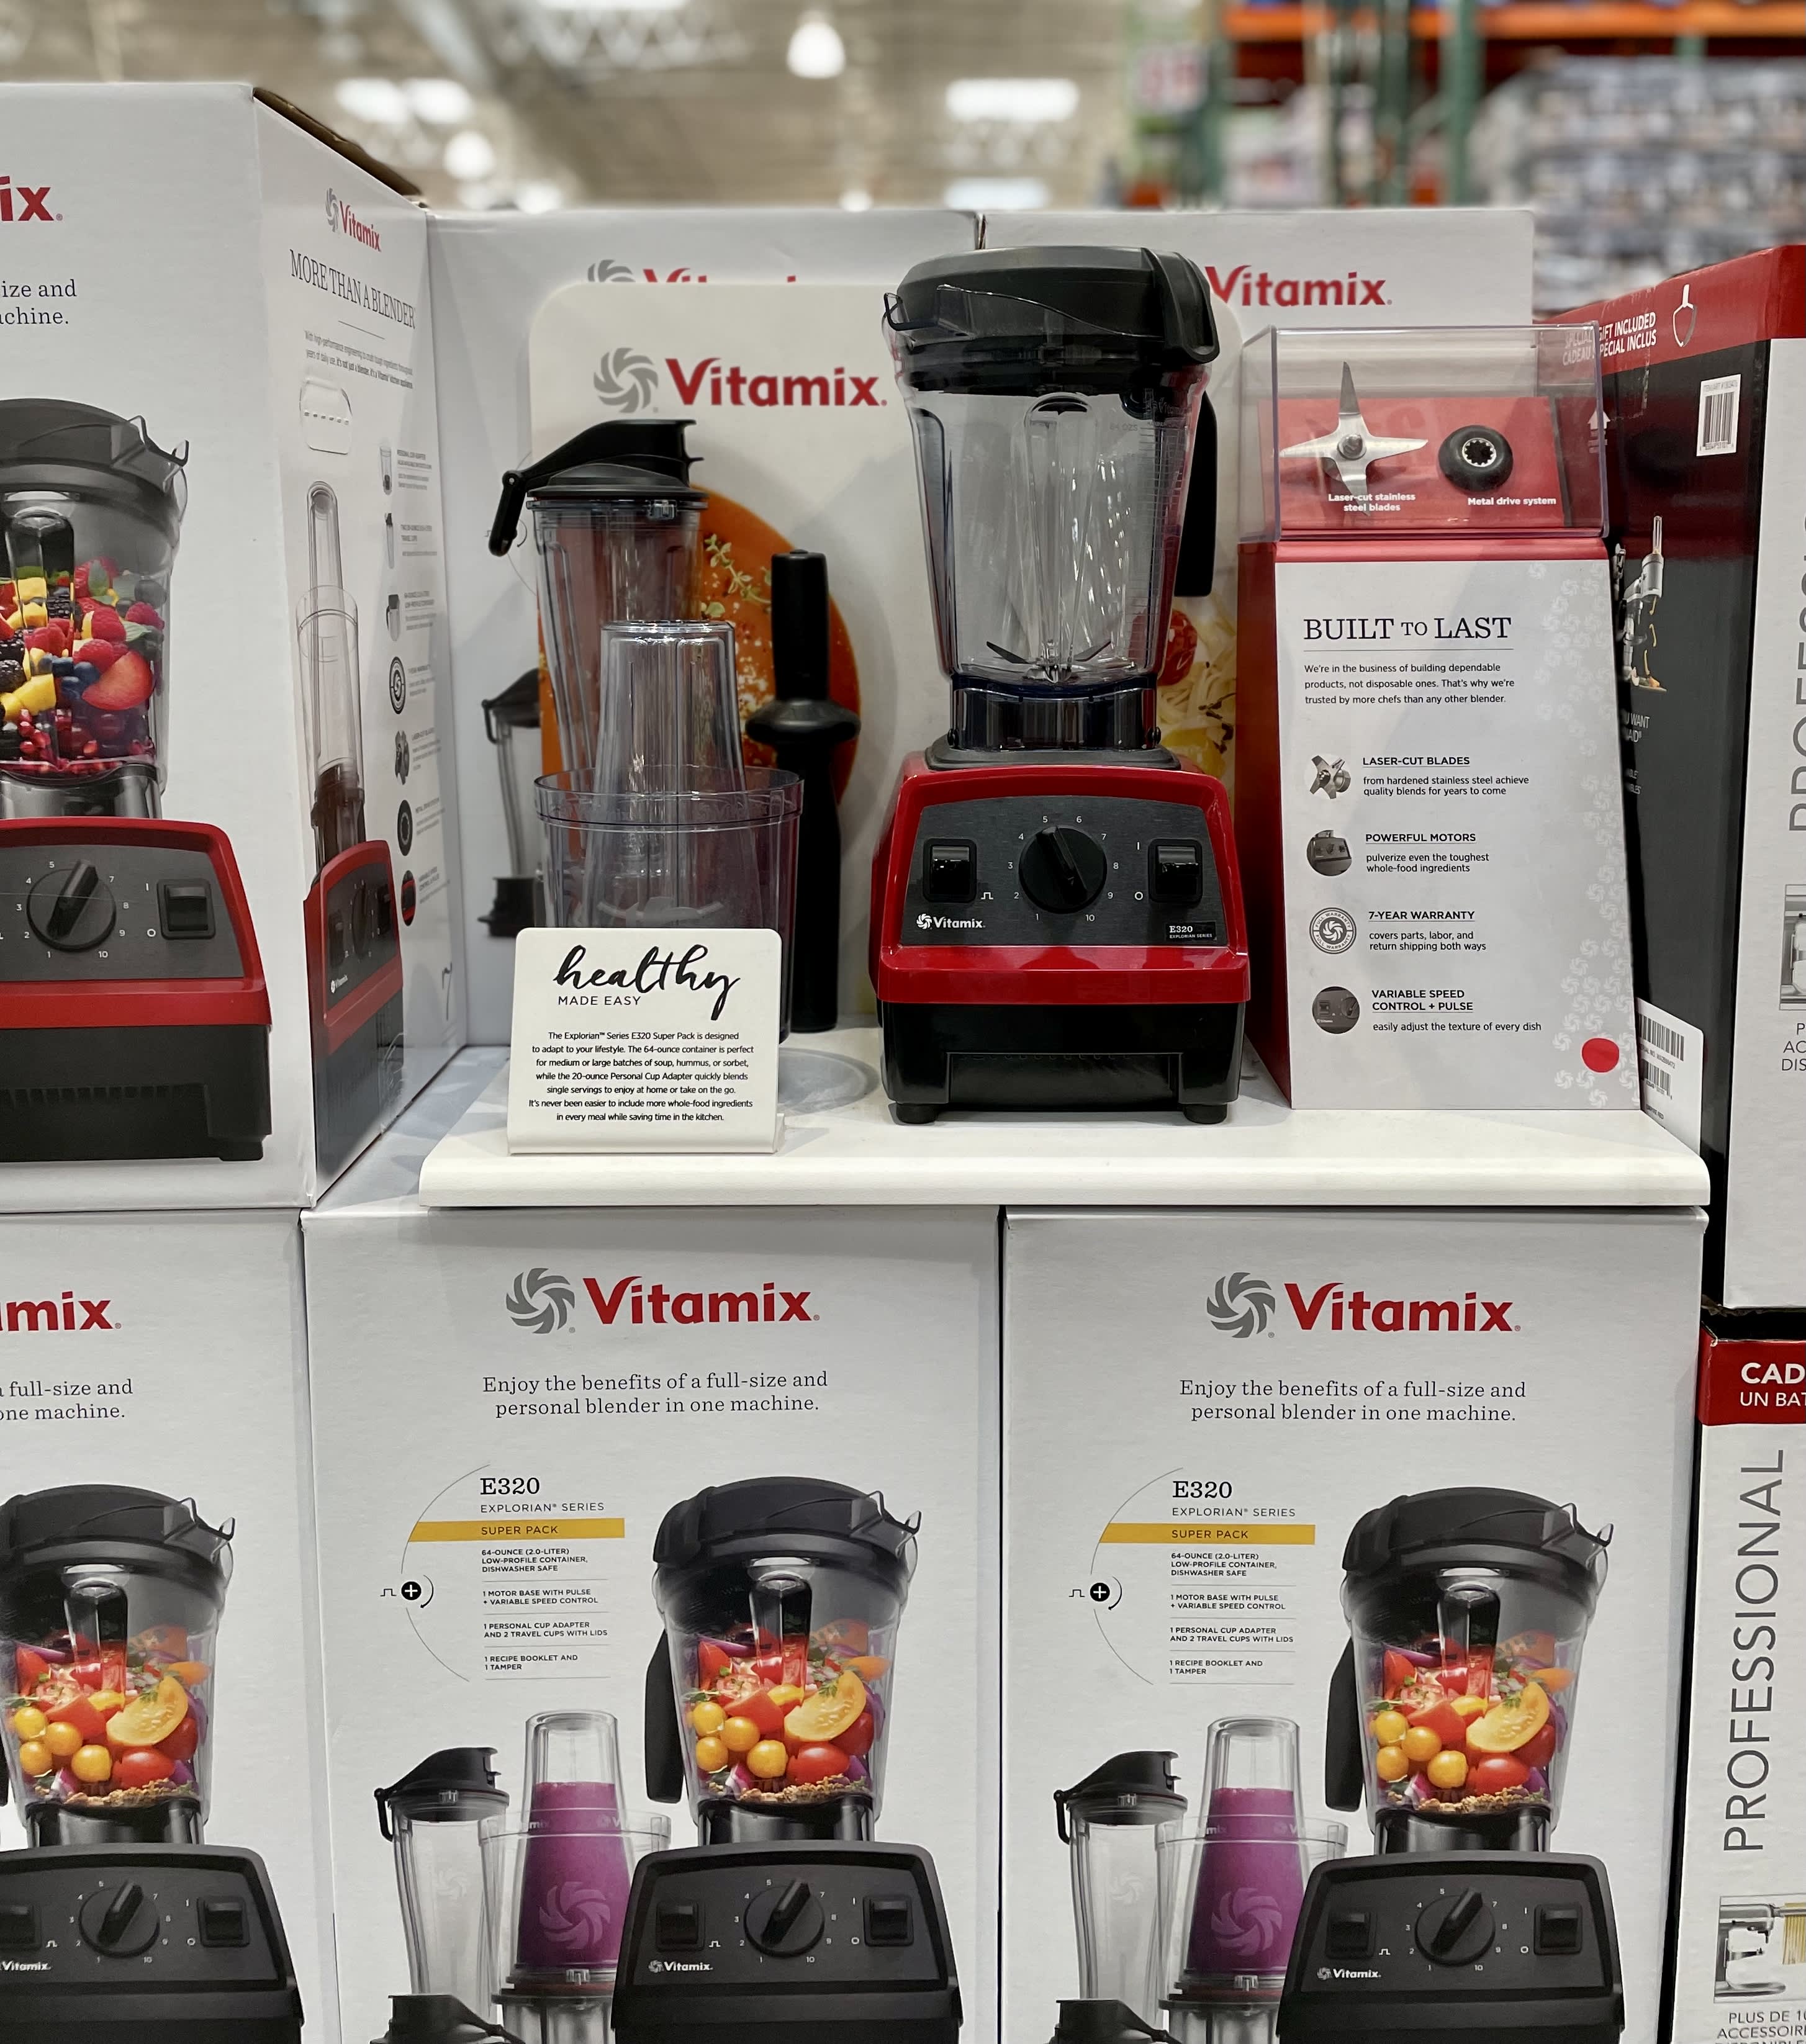 Costco Members: Vitamix Personal Blender Cup & Adapter